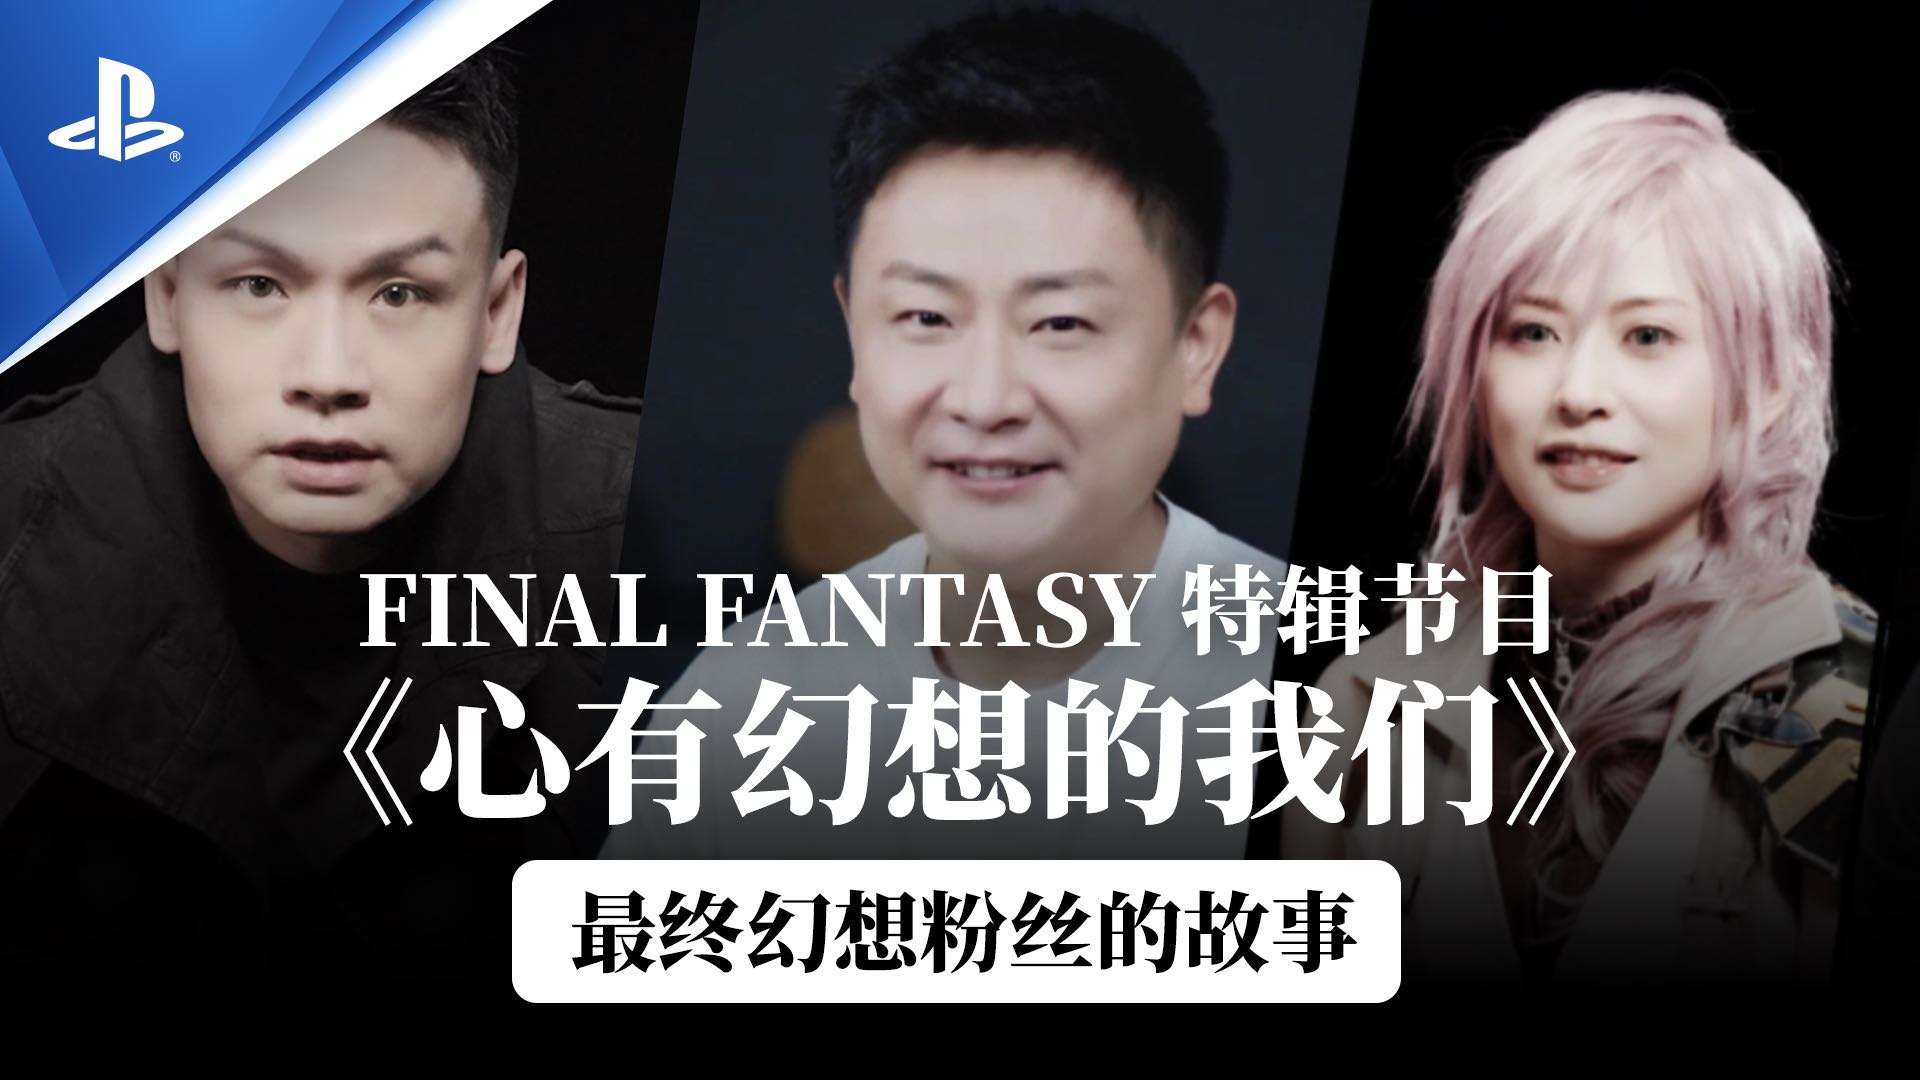 Final Fantasy Emotional Video 《心有幻想的我们》